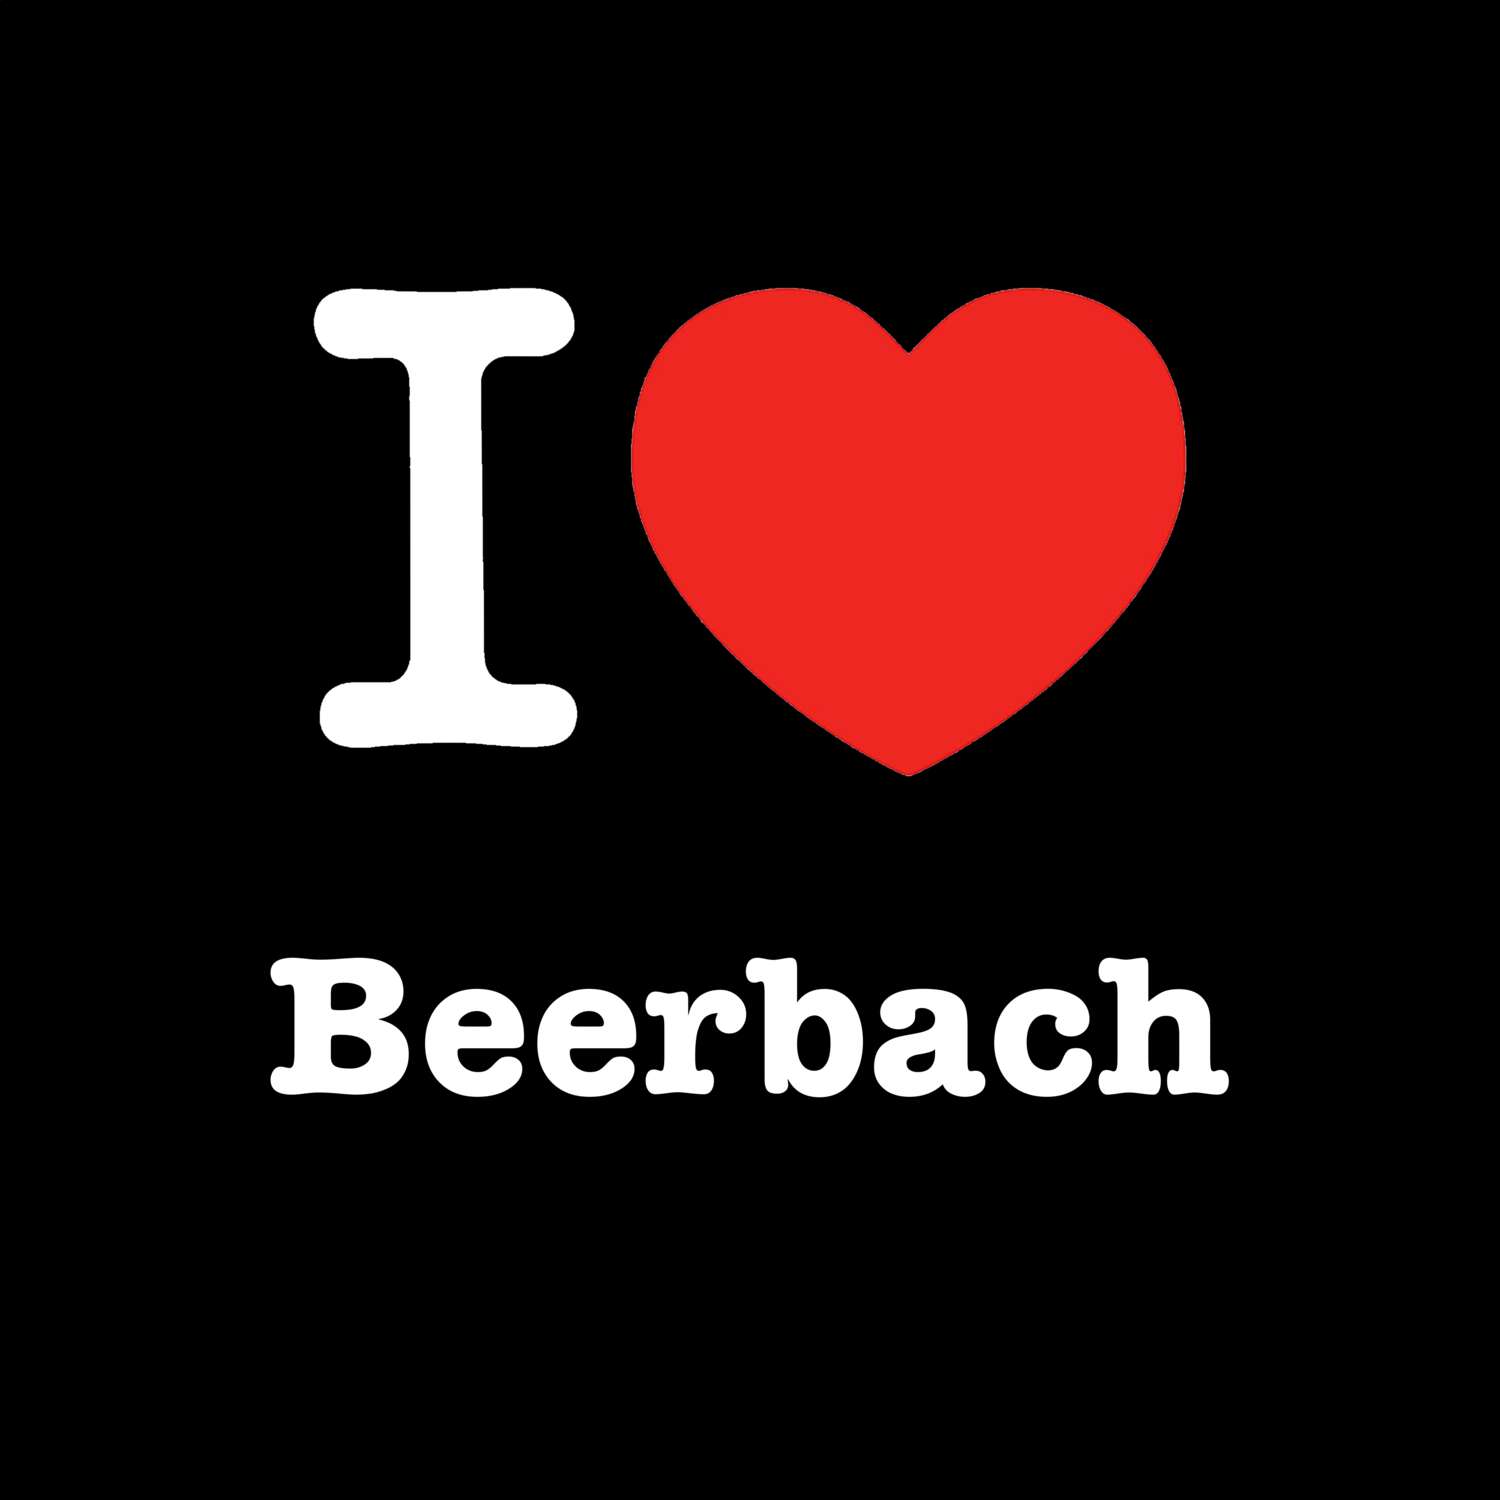 Beerbach T-Shirt »I love«